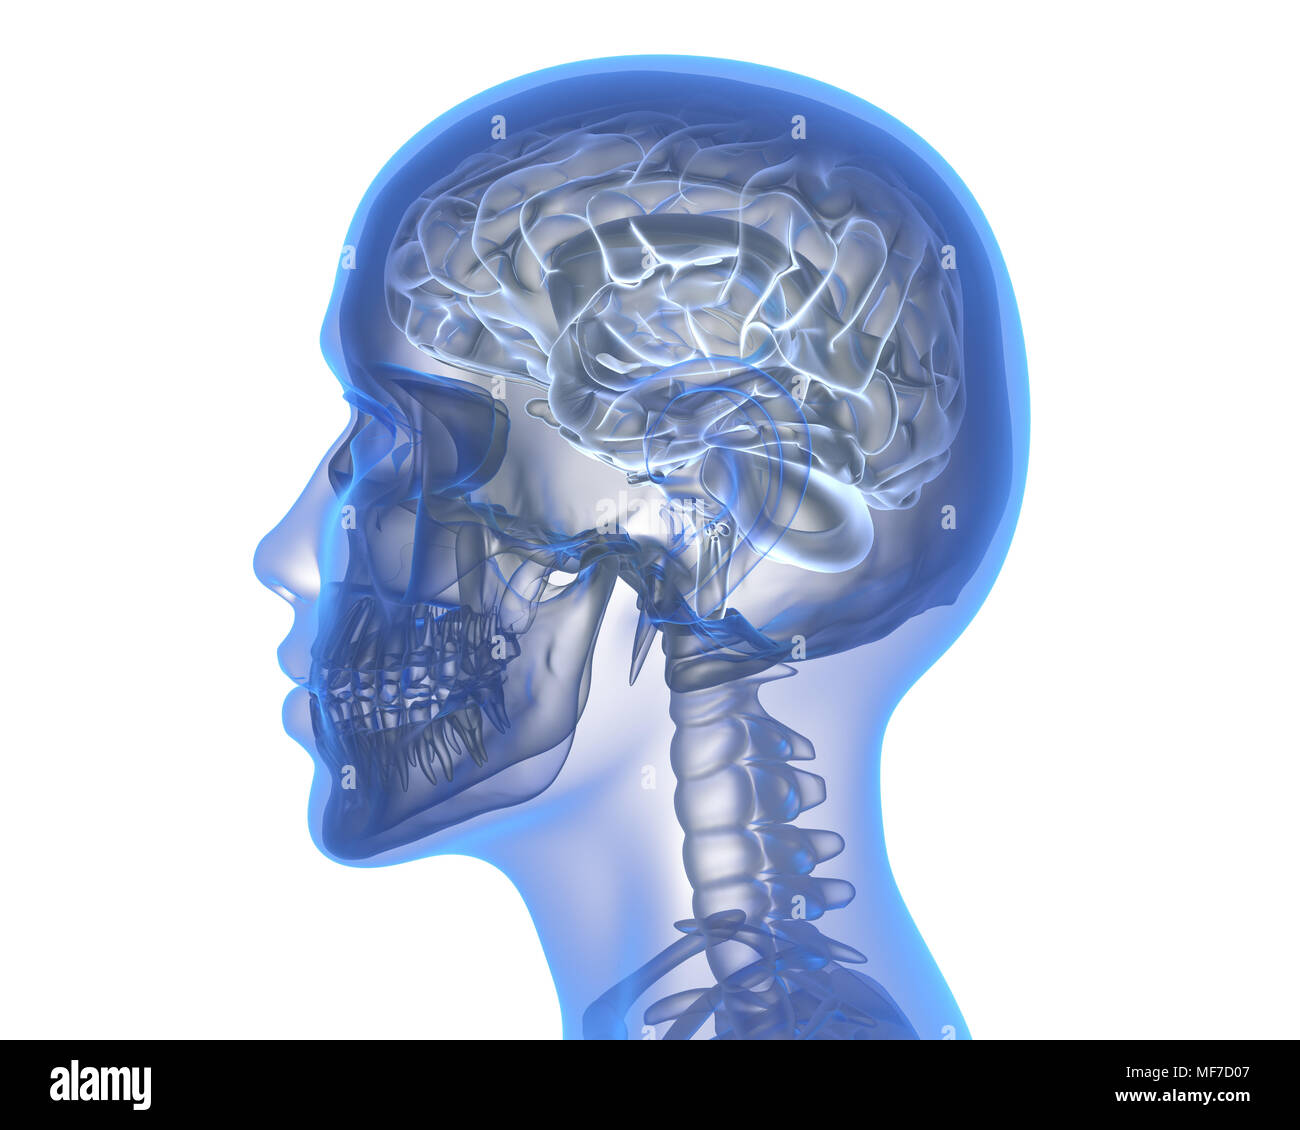 Human brain over white background. 3D illustration Stock Photo